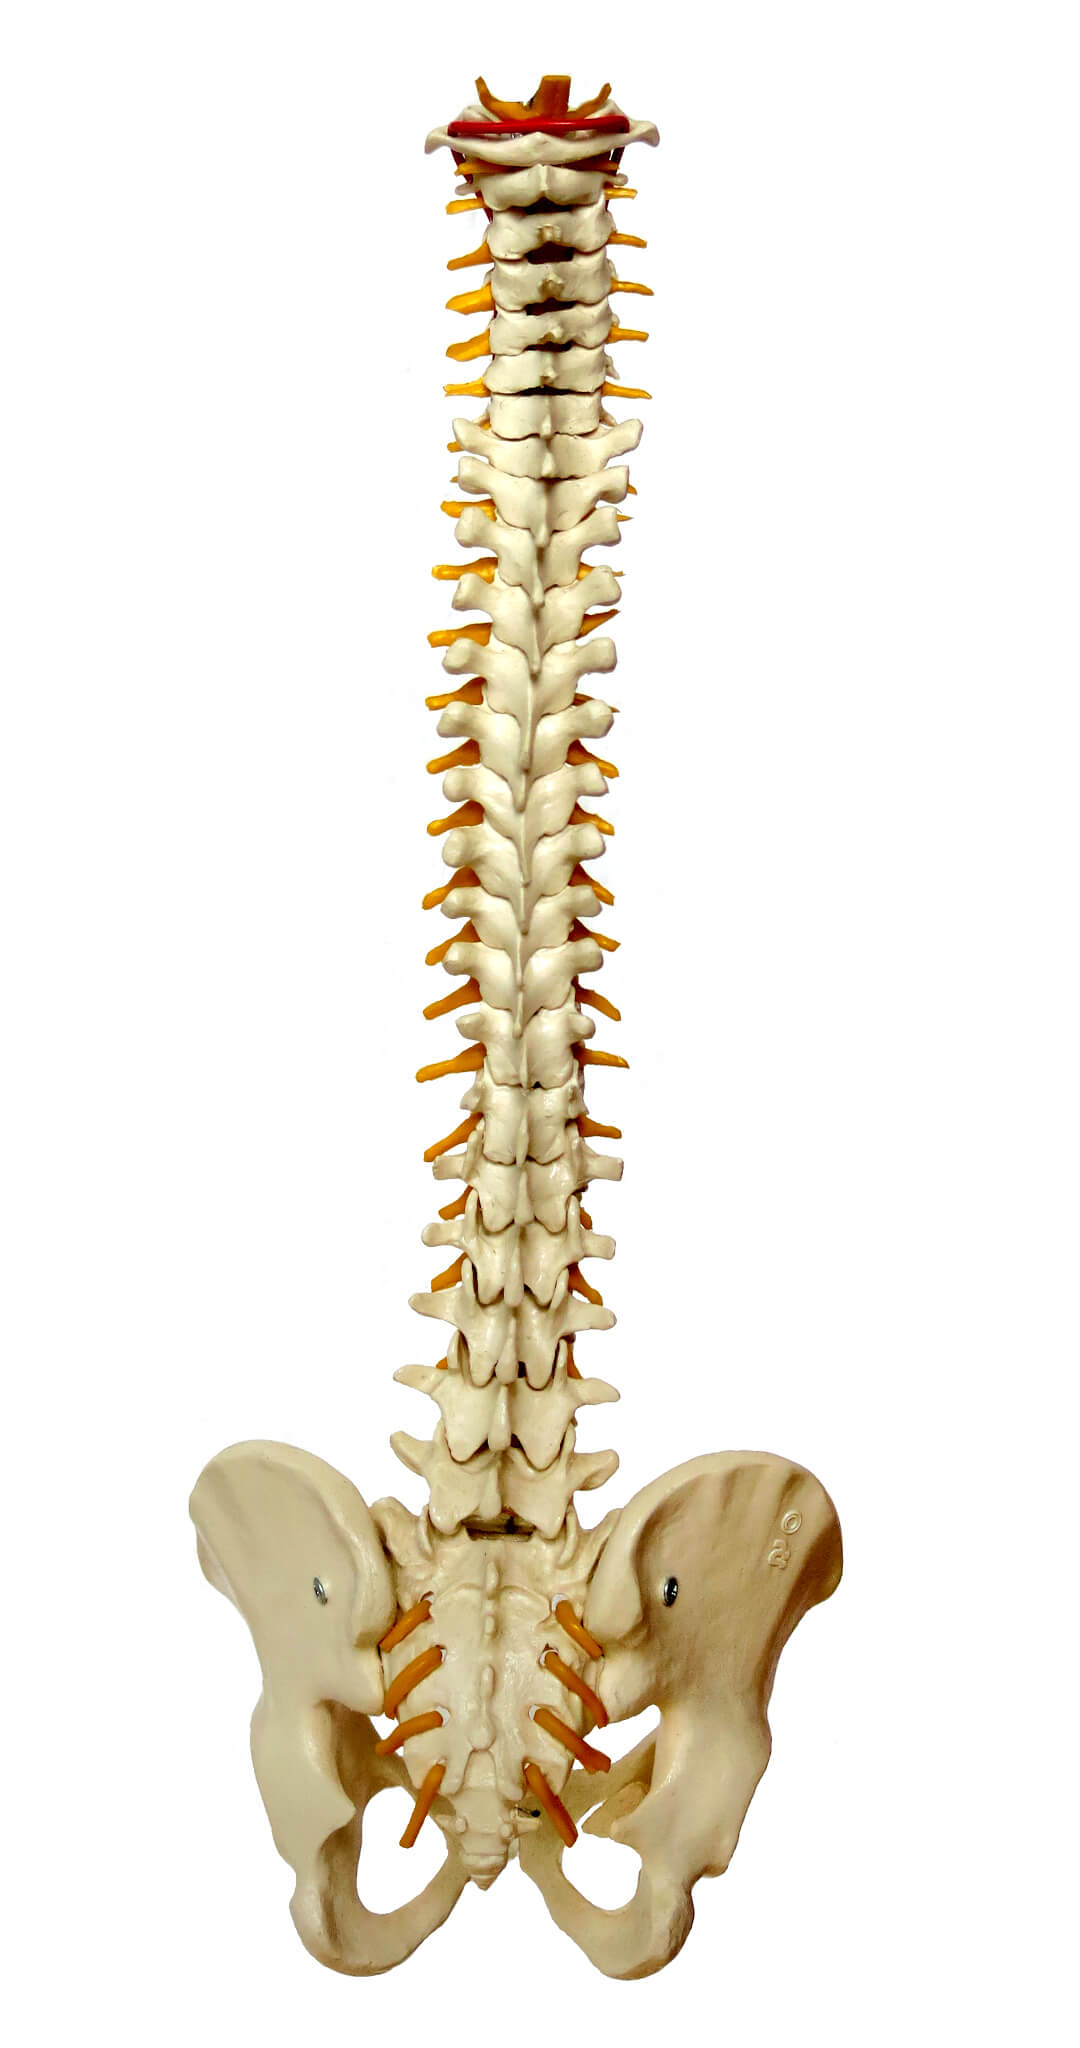 Interactive Spine